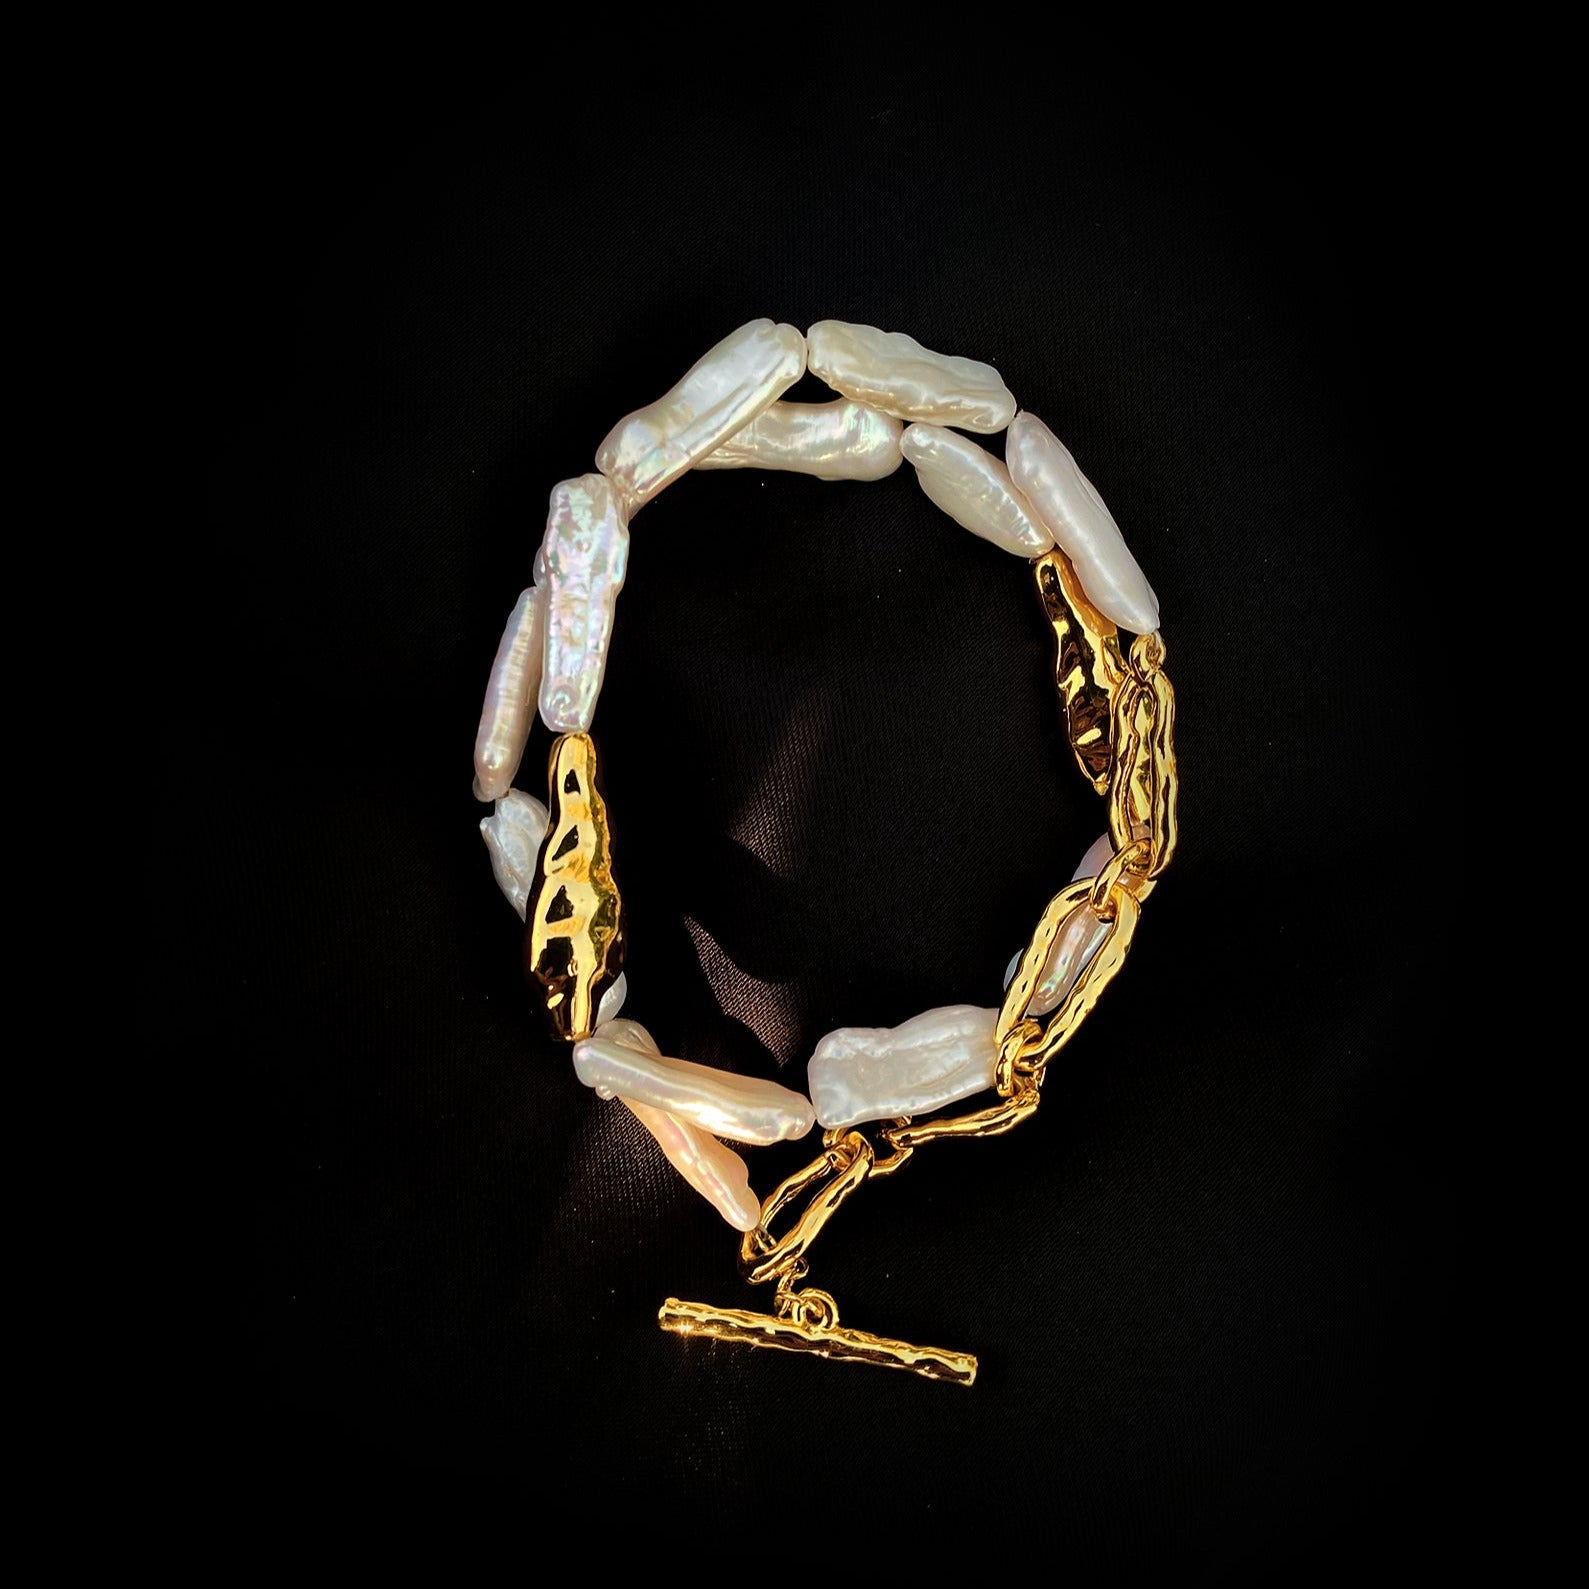 Golden Harmony Baroque Pearl Collar Necklace - floysun